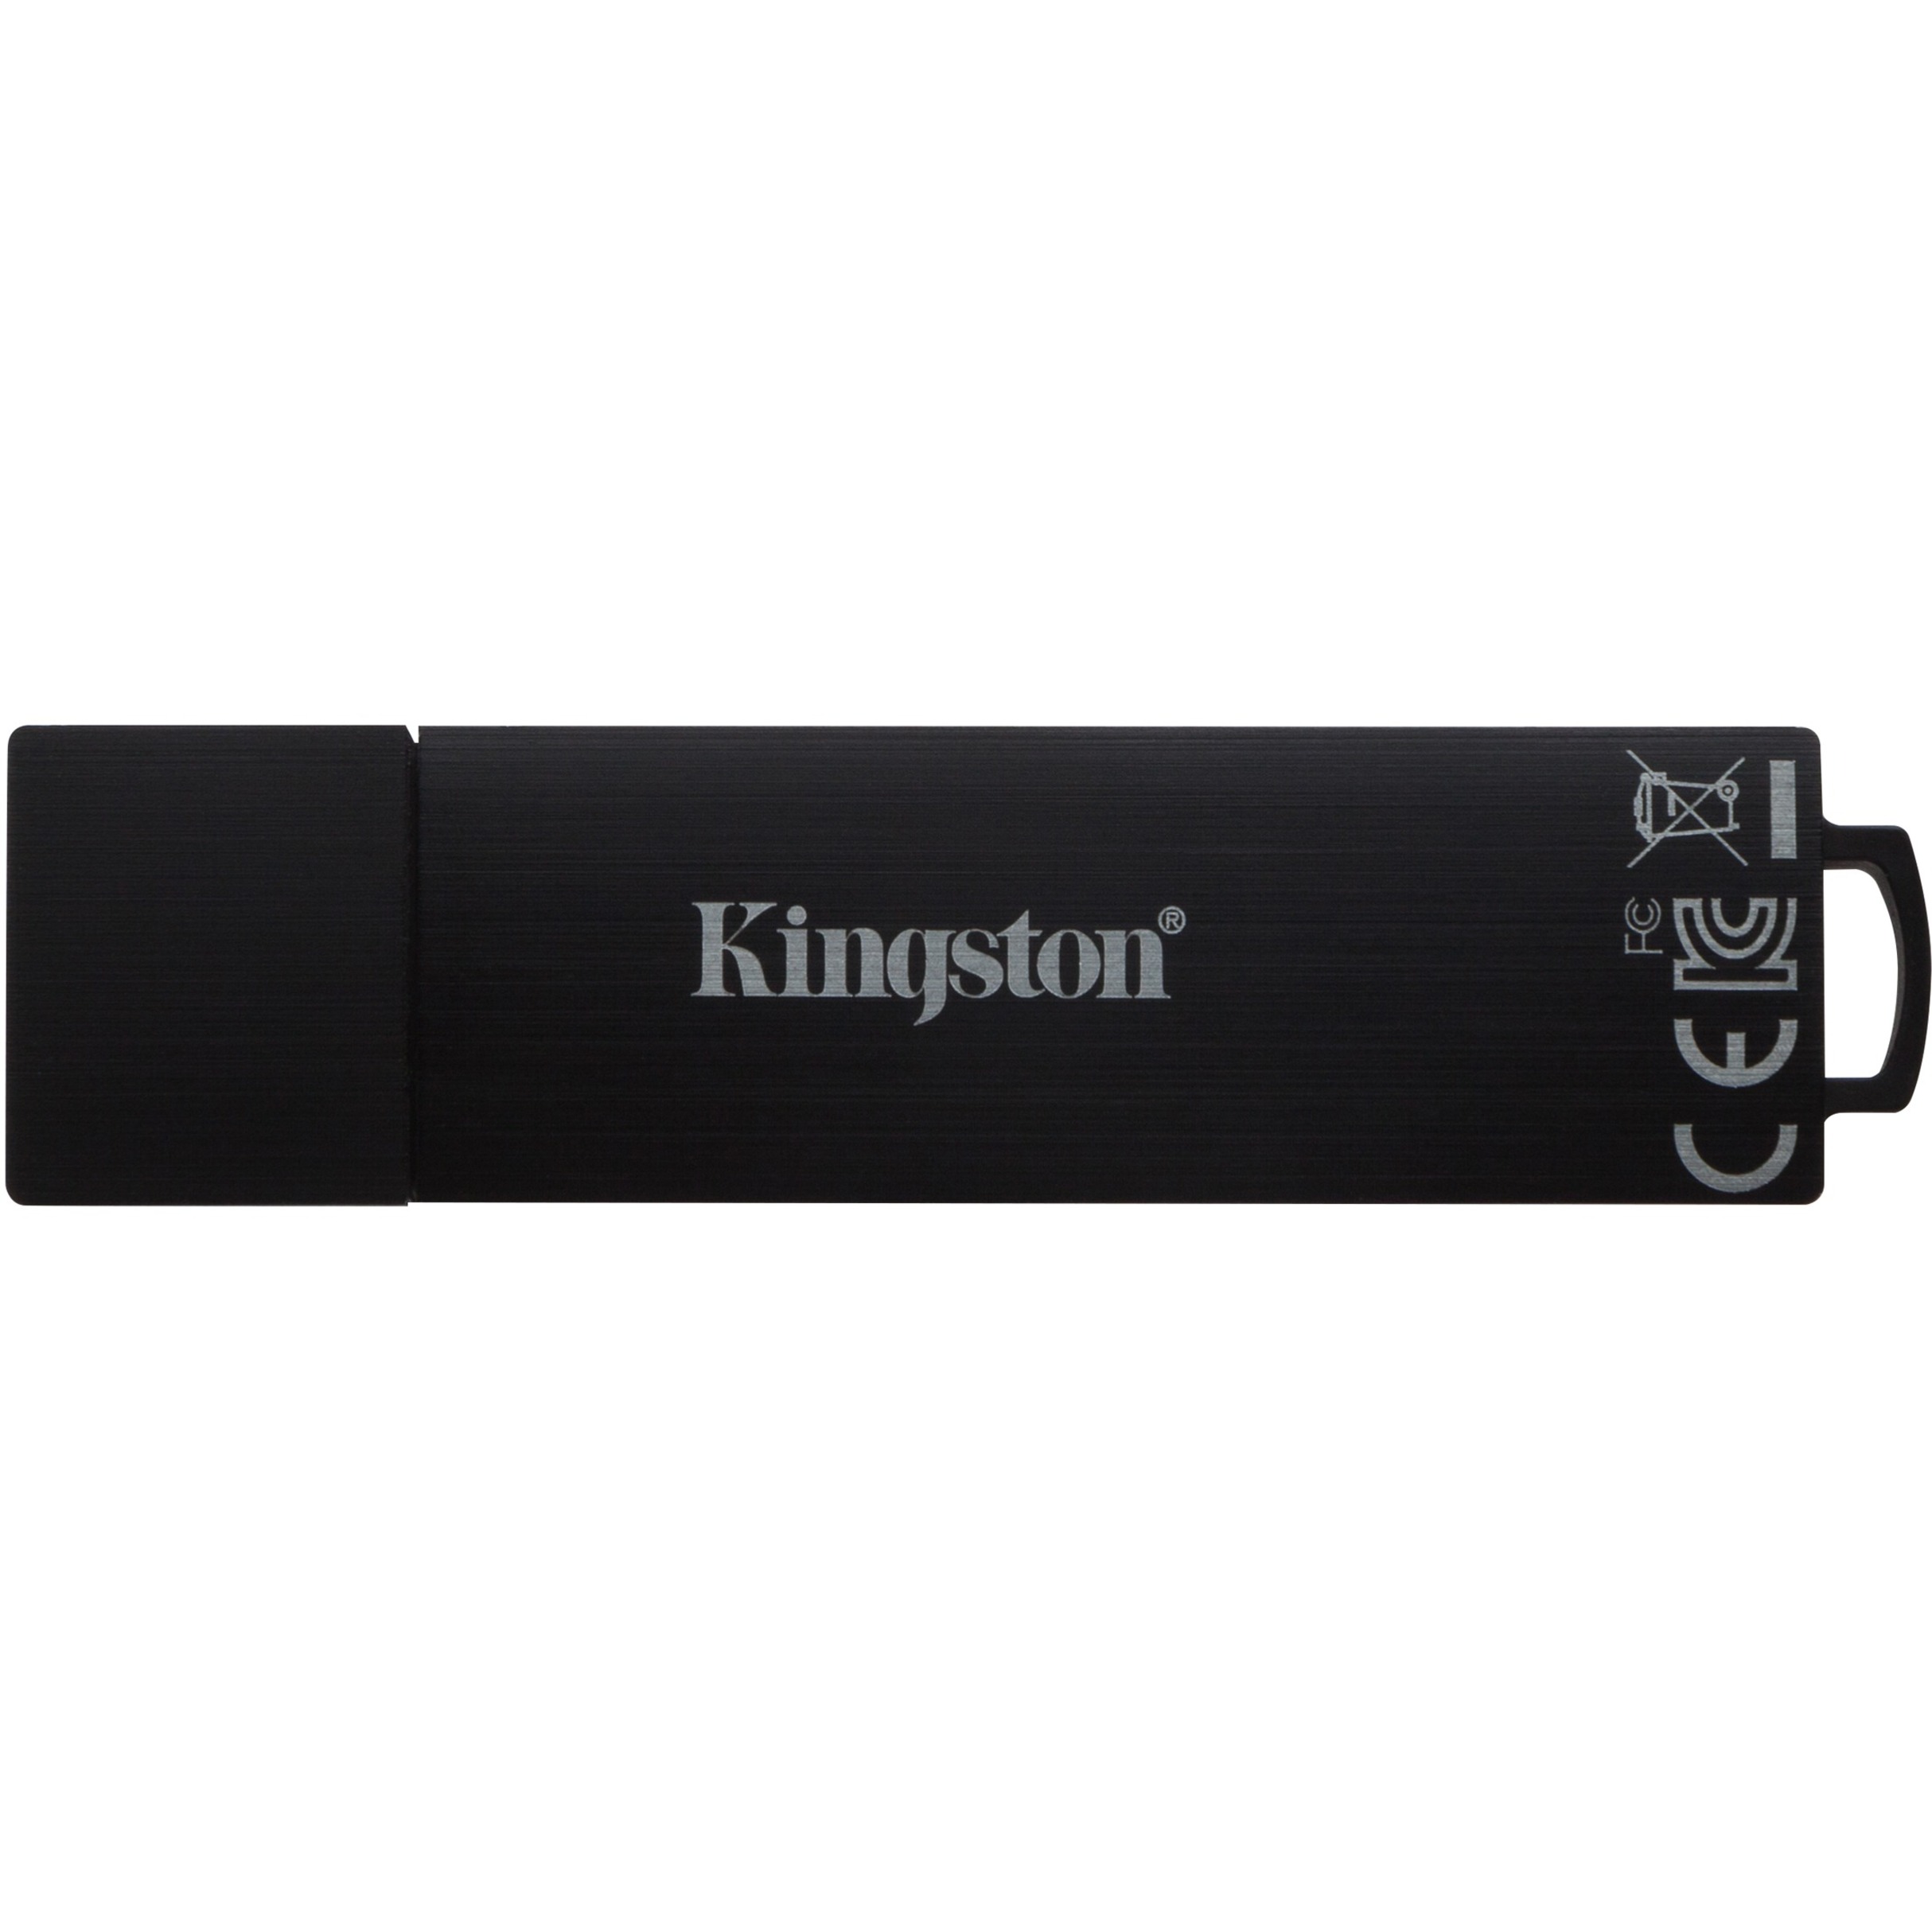 Kingston IronKeyTM D300 8GB USB Flash drive - image 3 of 3